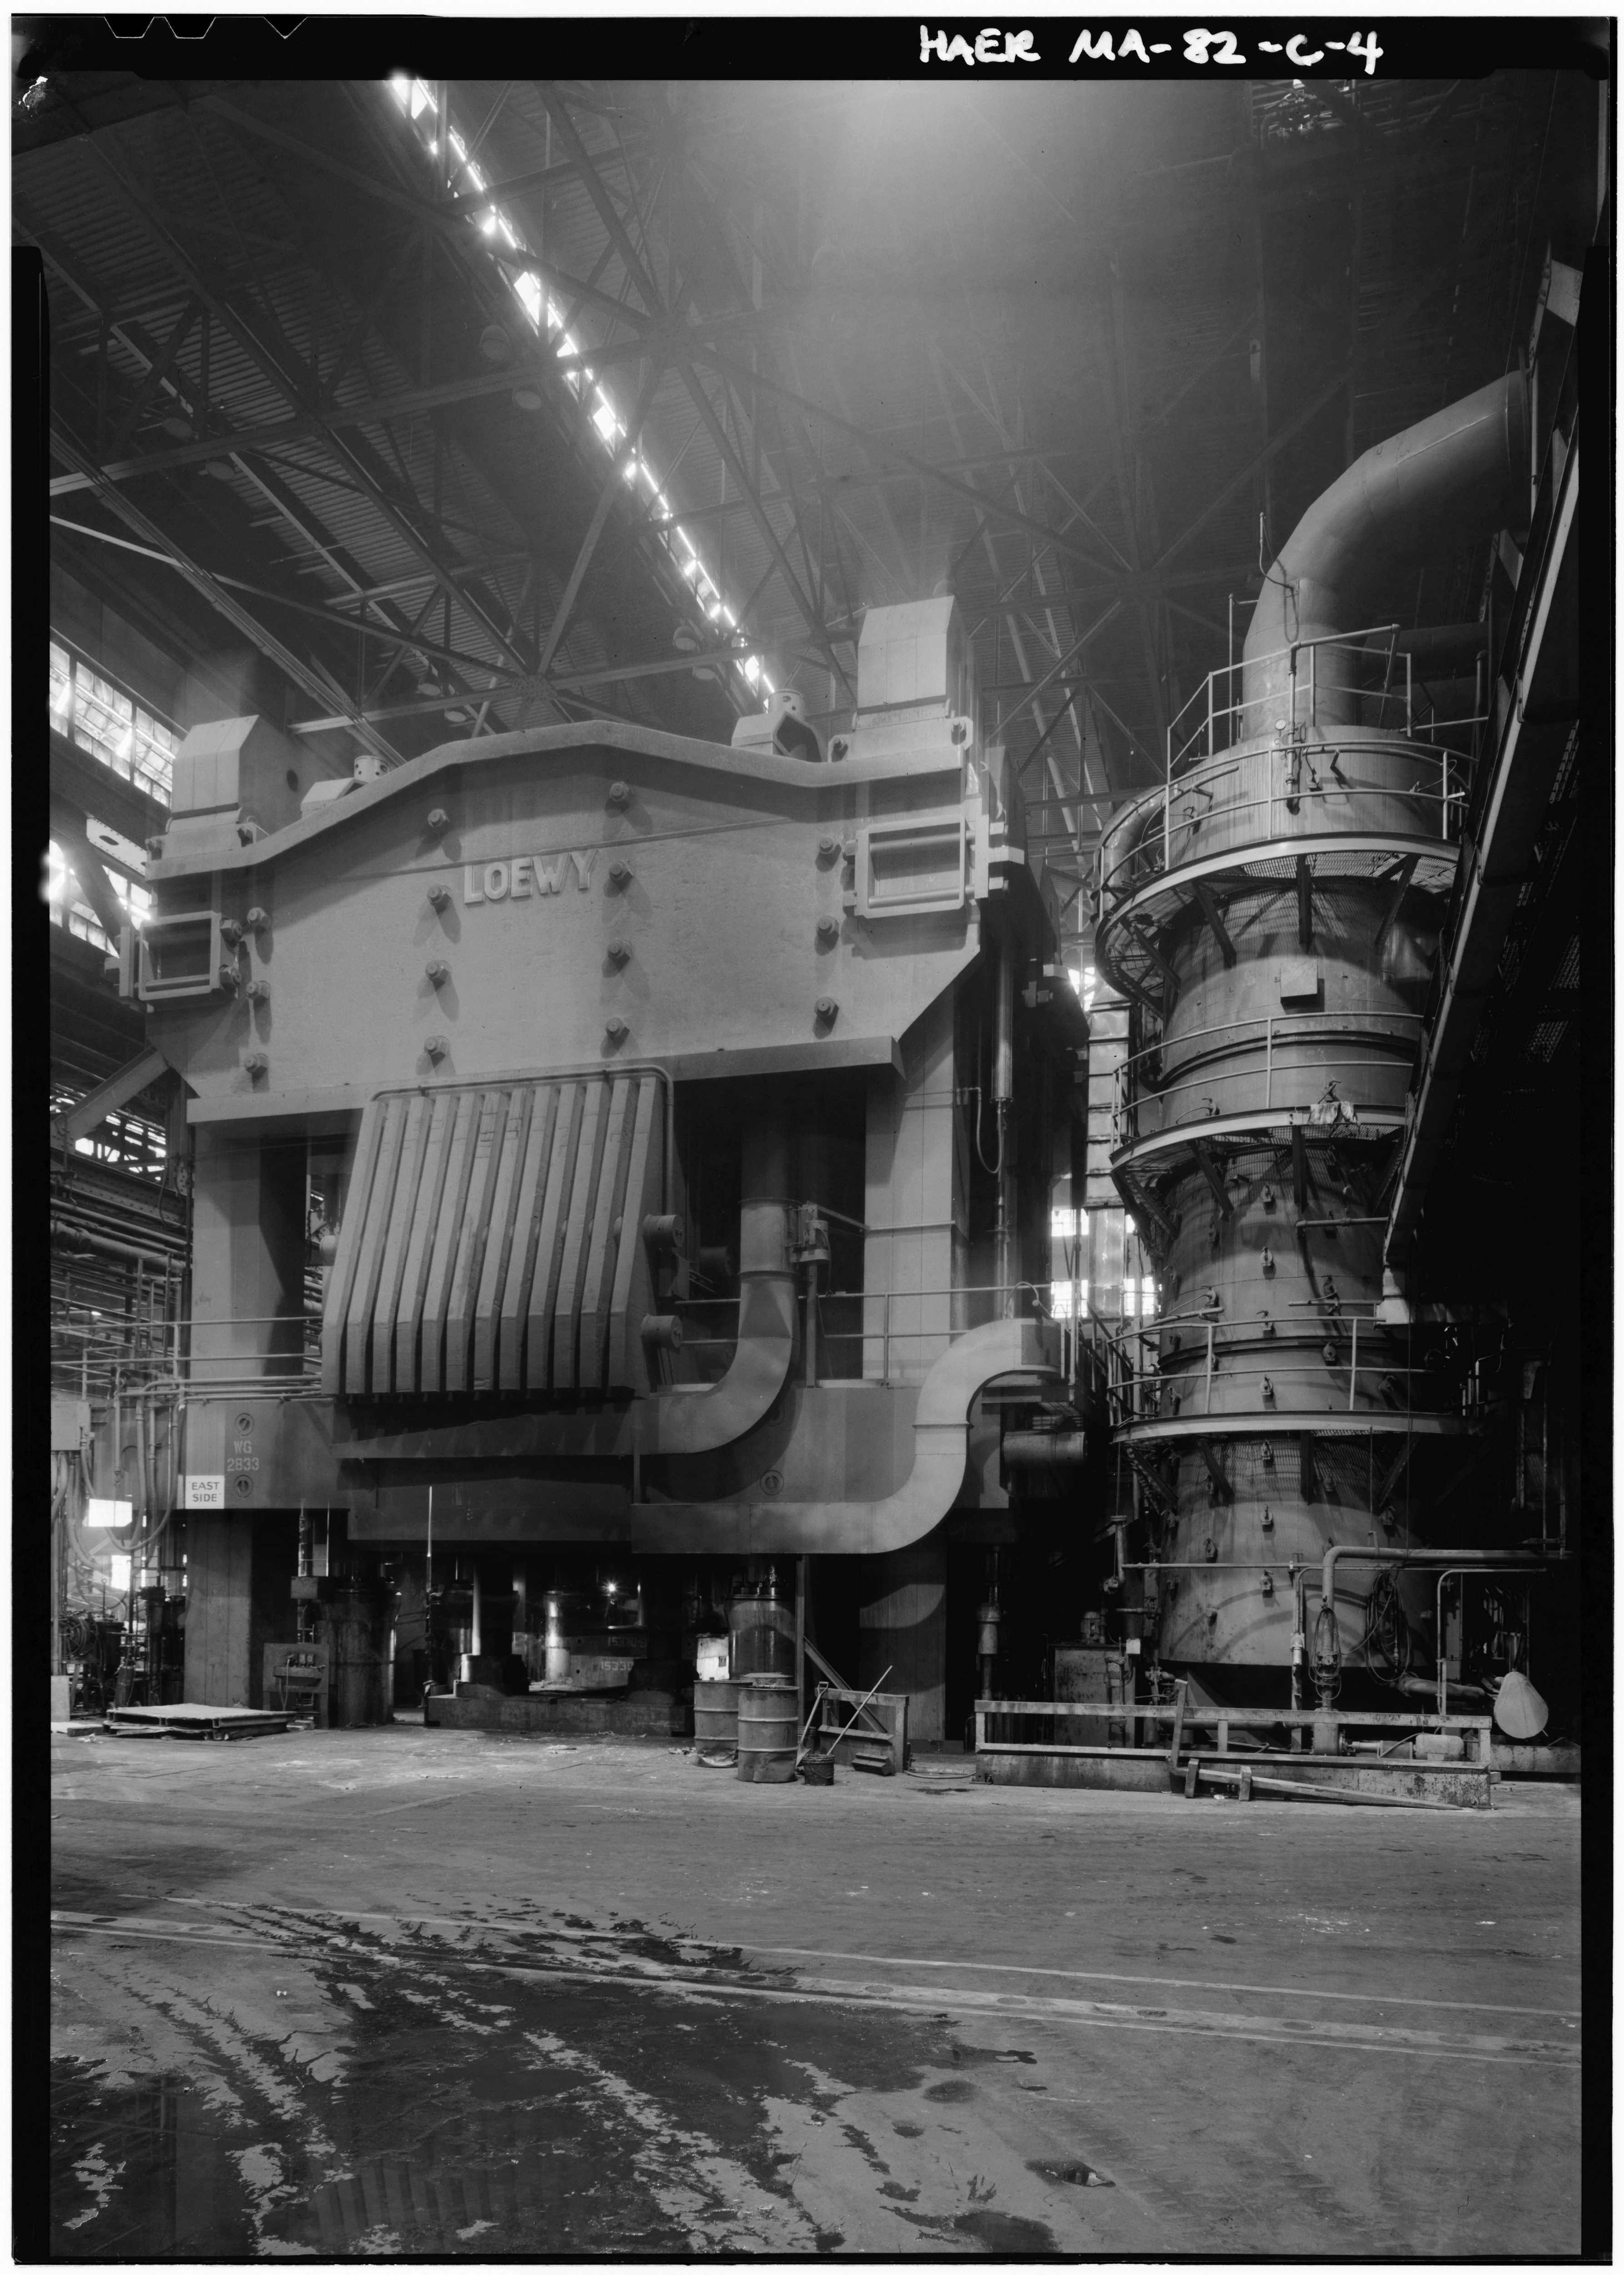 Loewy 50000-Ton Forging Press Wyman-Gordon Plant Grafton MA 1985 view 8x10 photo 